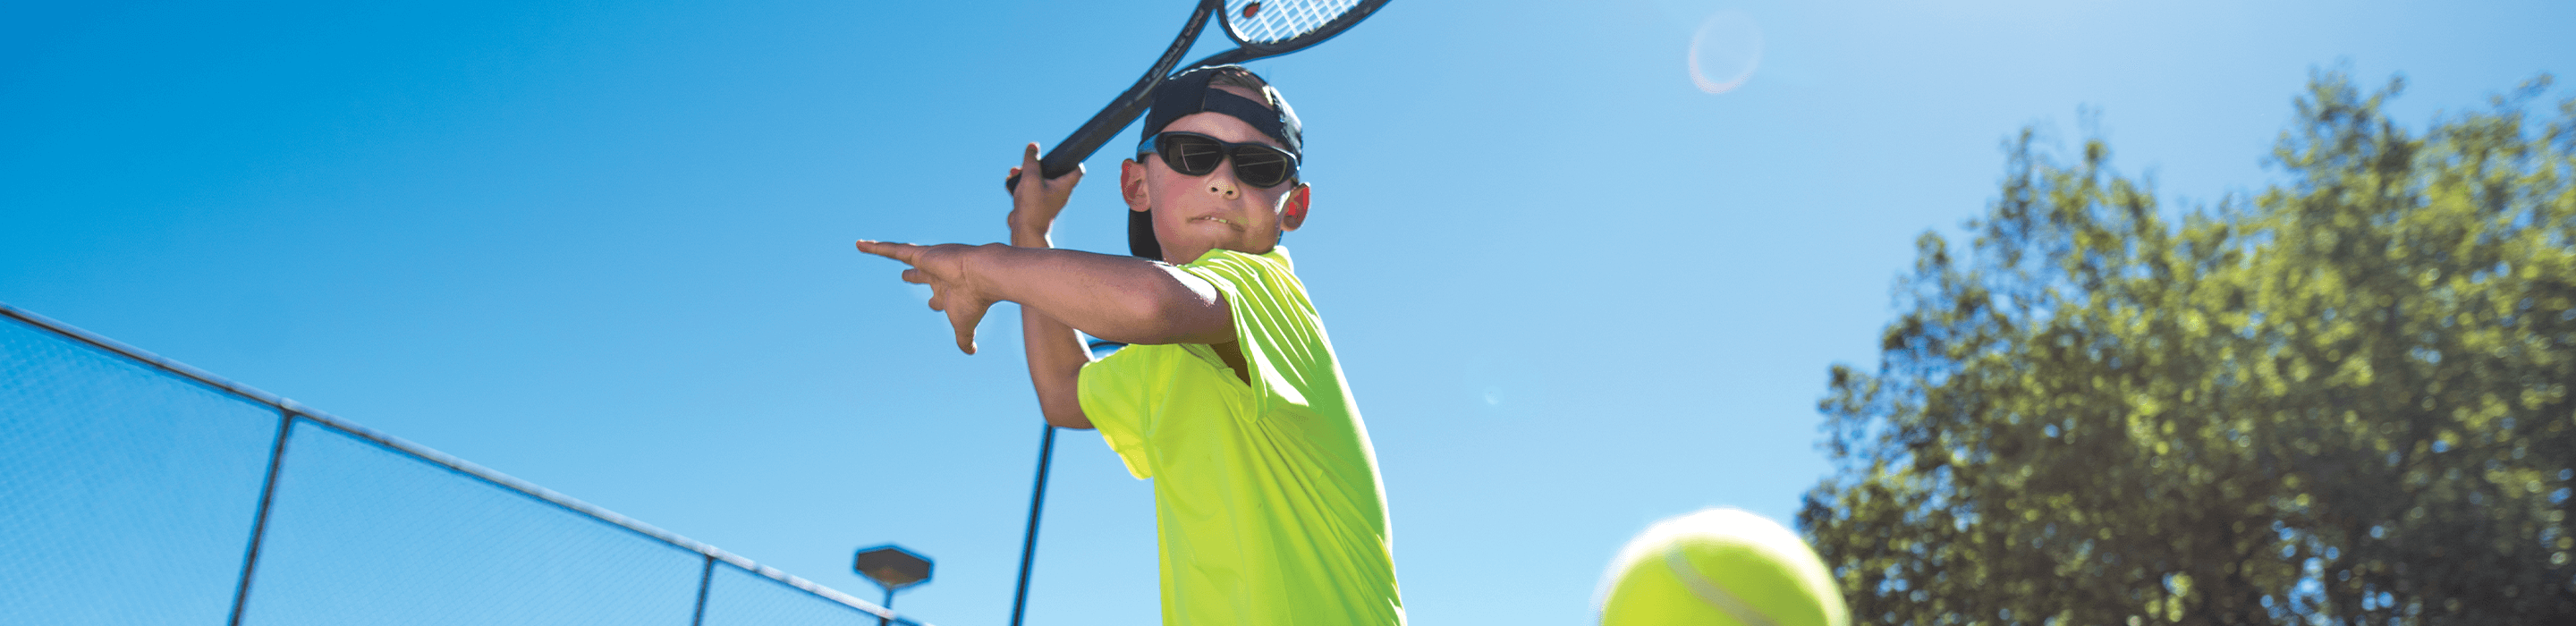 Kids' Tennis Sunglasses & Kids' Tennis Glasses